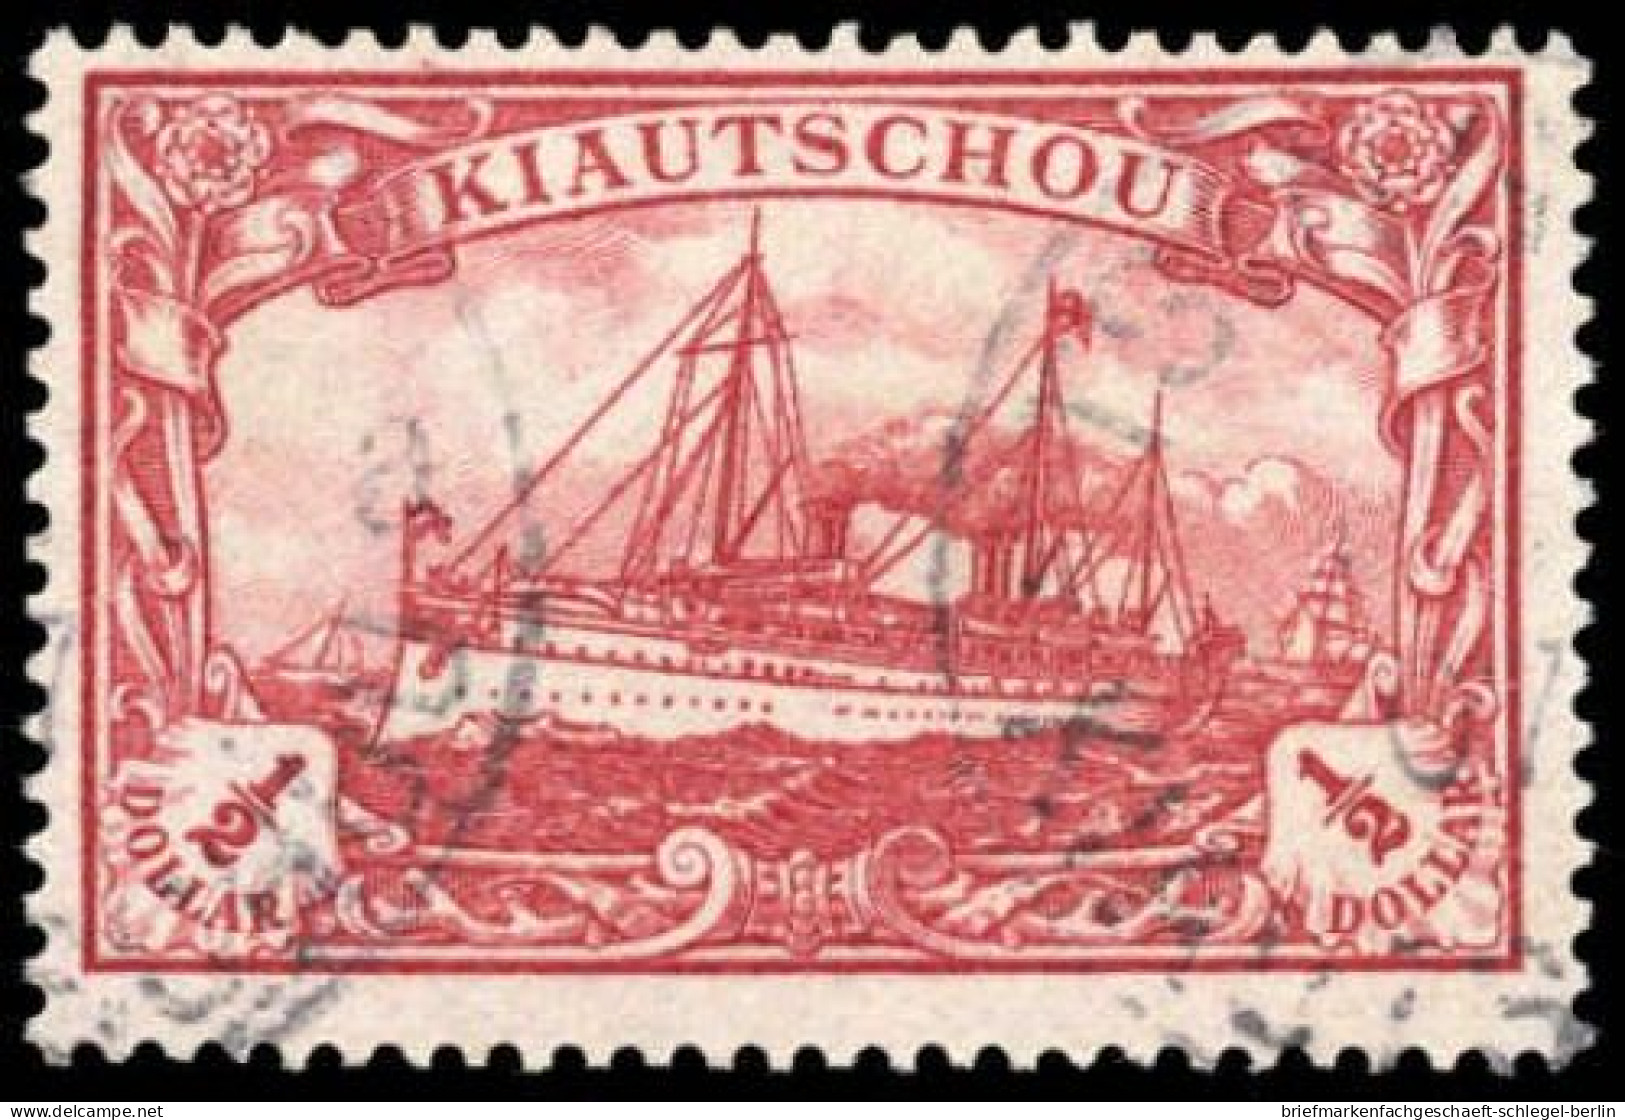 Deutsche Kolonien Kiautschou, 1905, 24 B, Gestempelt - Kiaochow